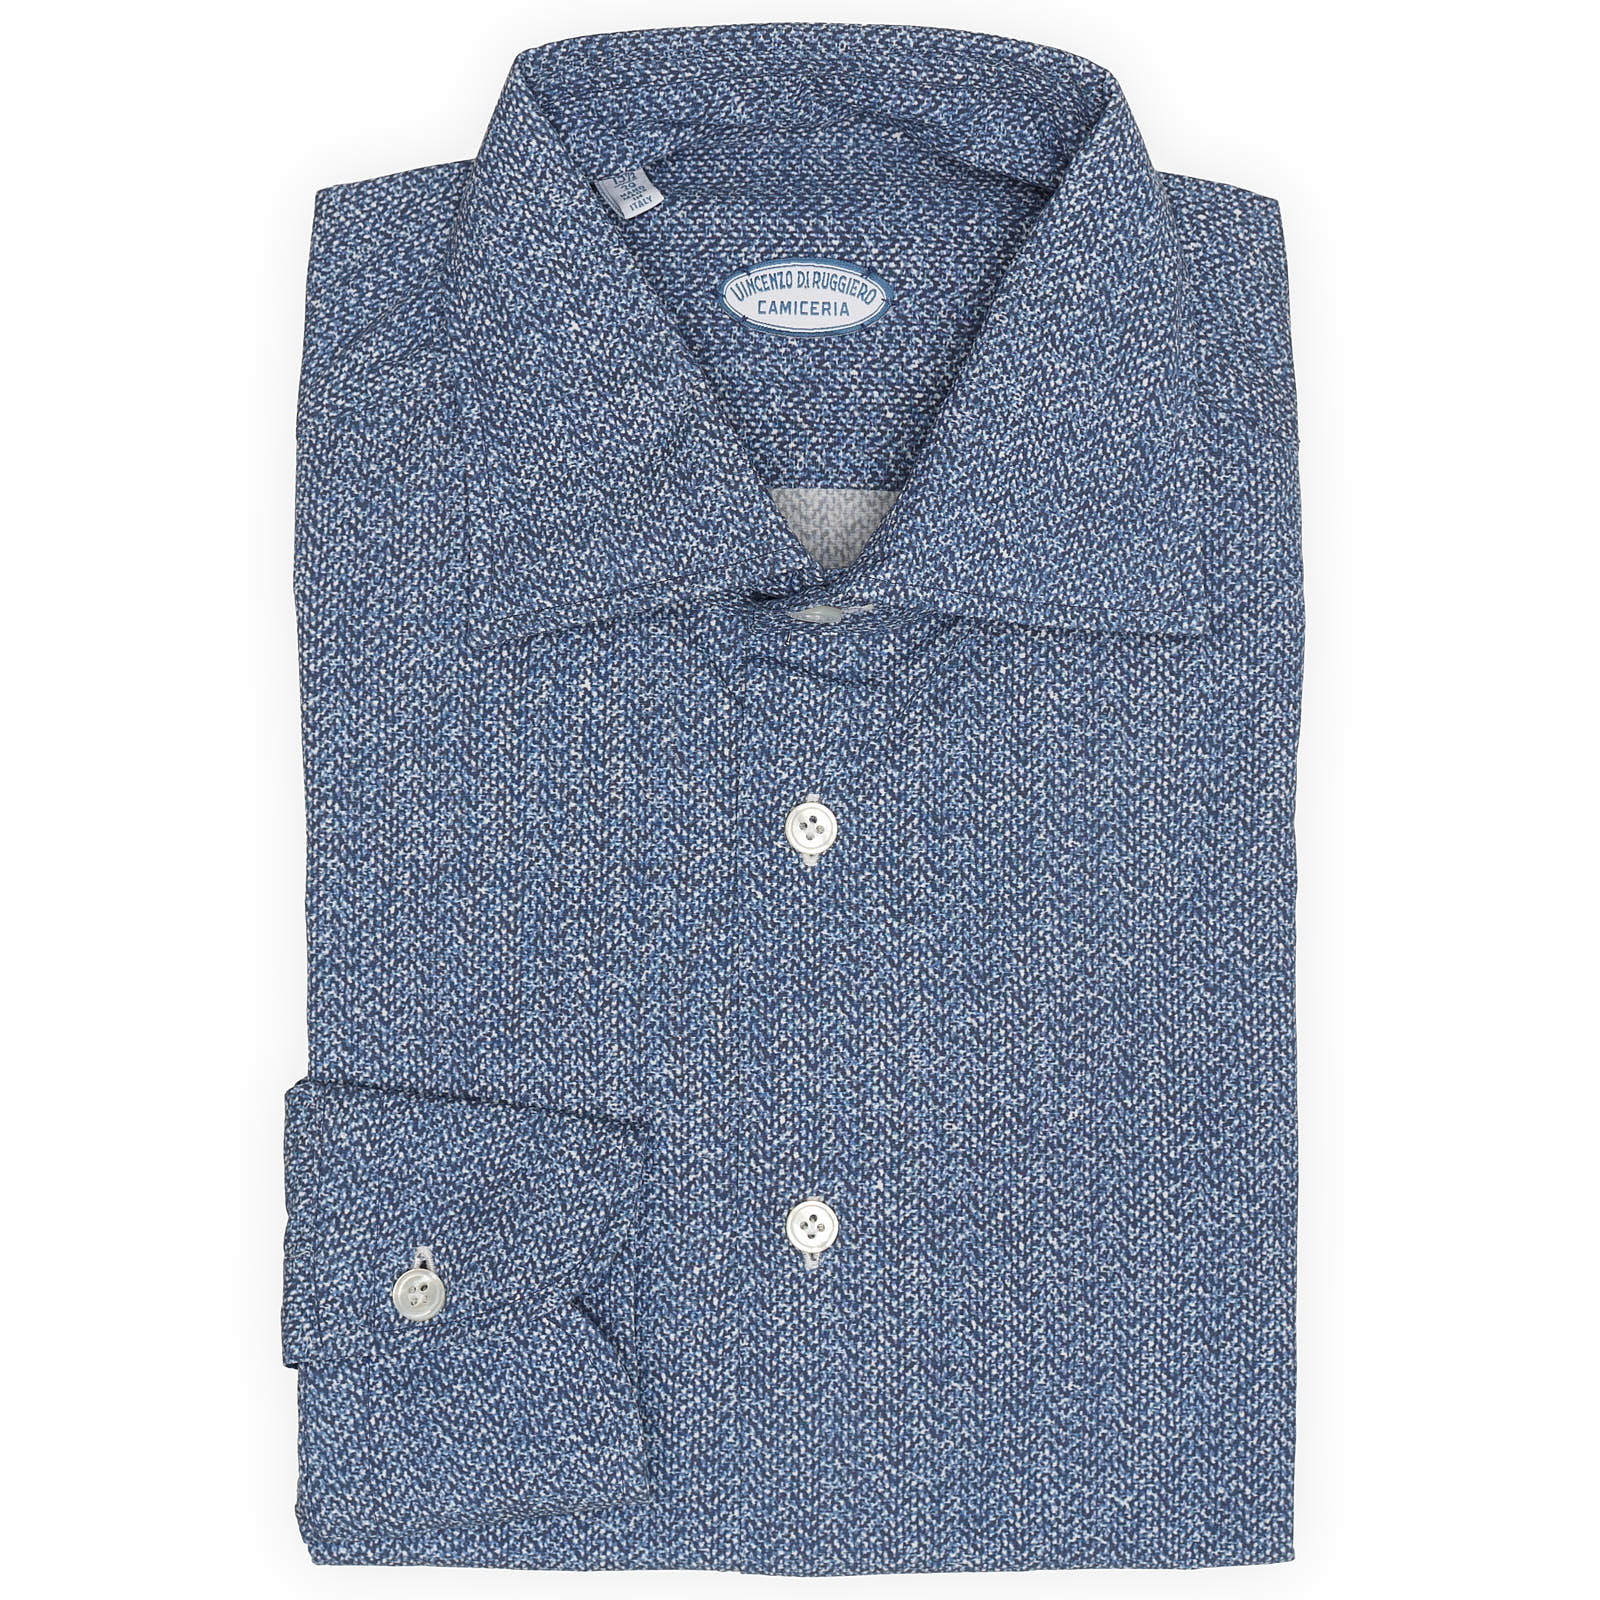 VINCENZO DI RUGGIERO Handmade Blue Cotton Shirt EU 39 NEW US 15.5